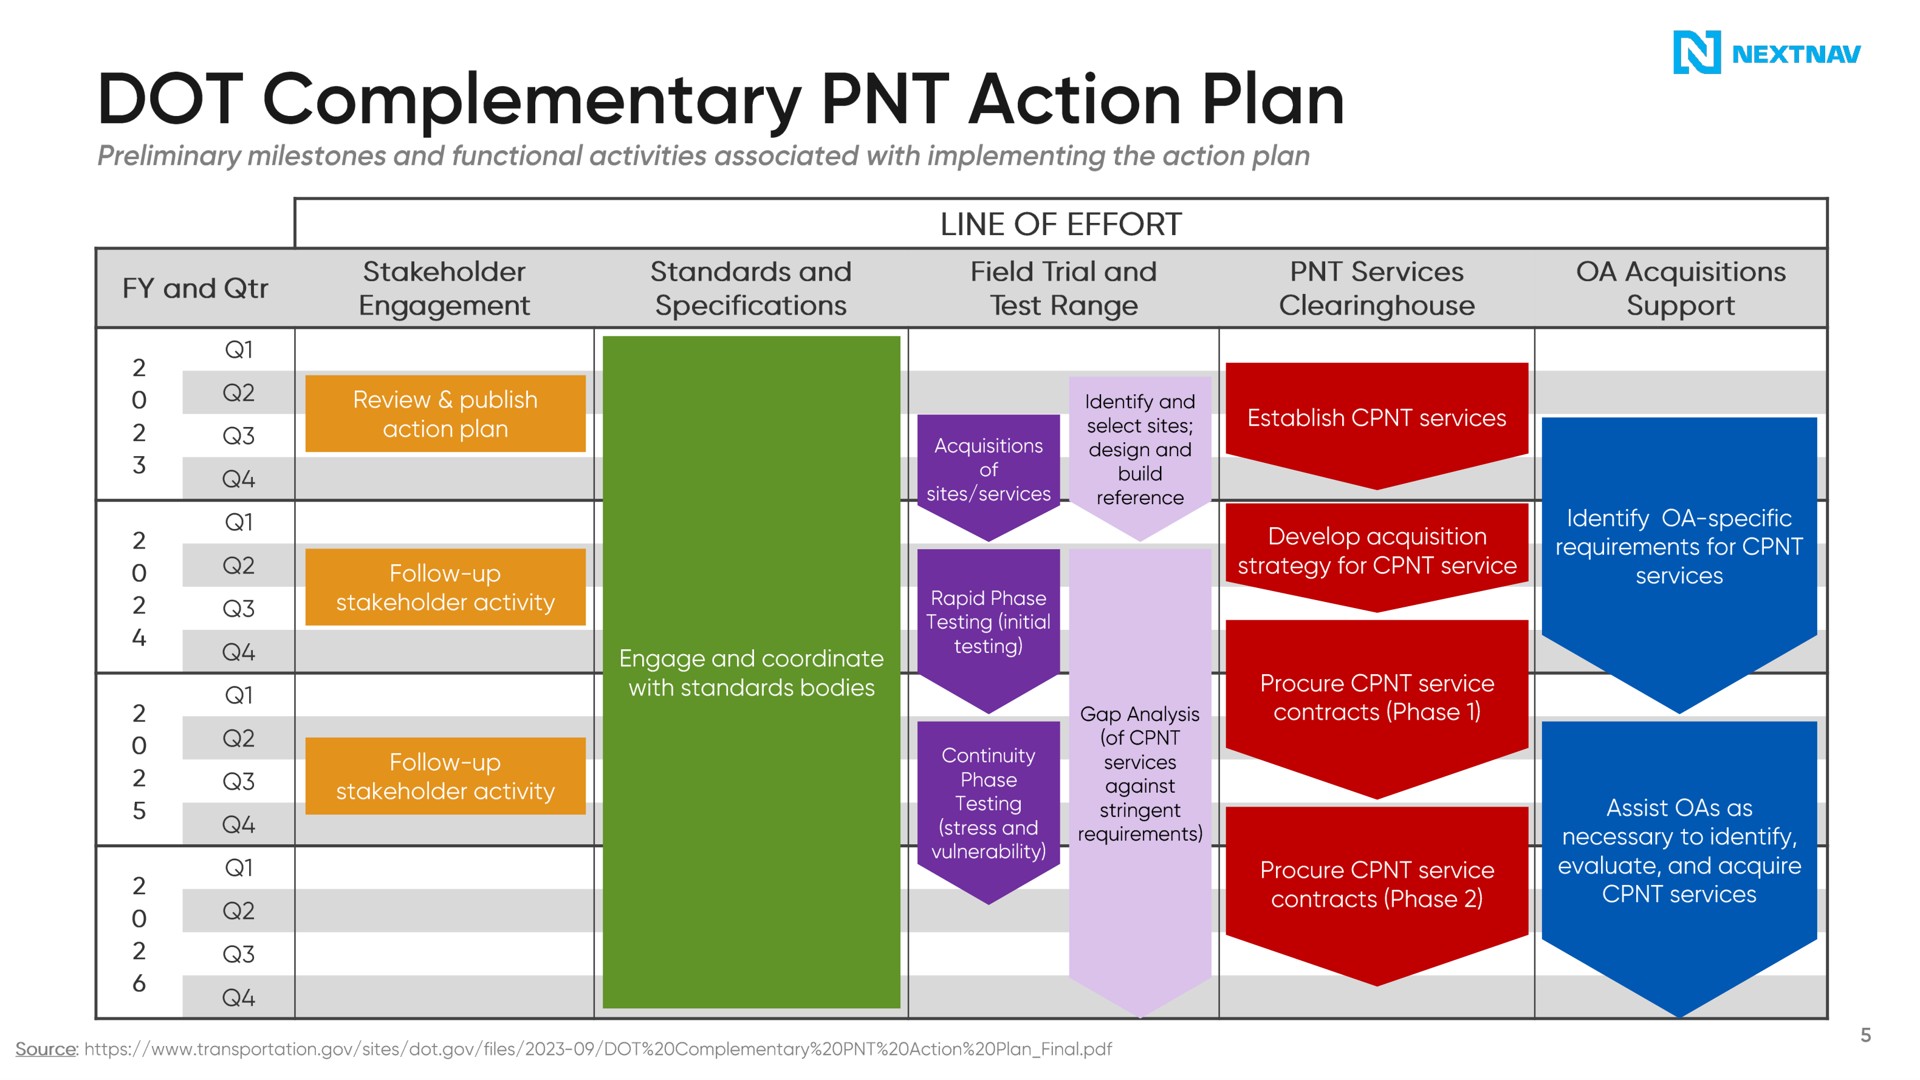 dot complementary action plan | NextNav